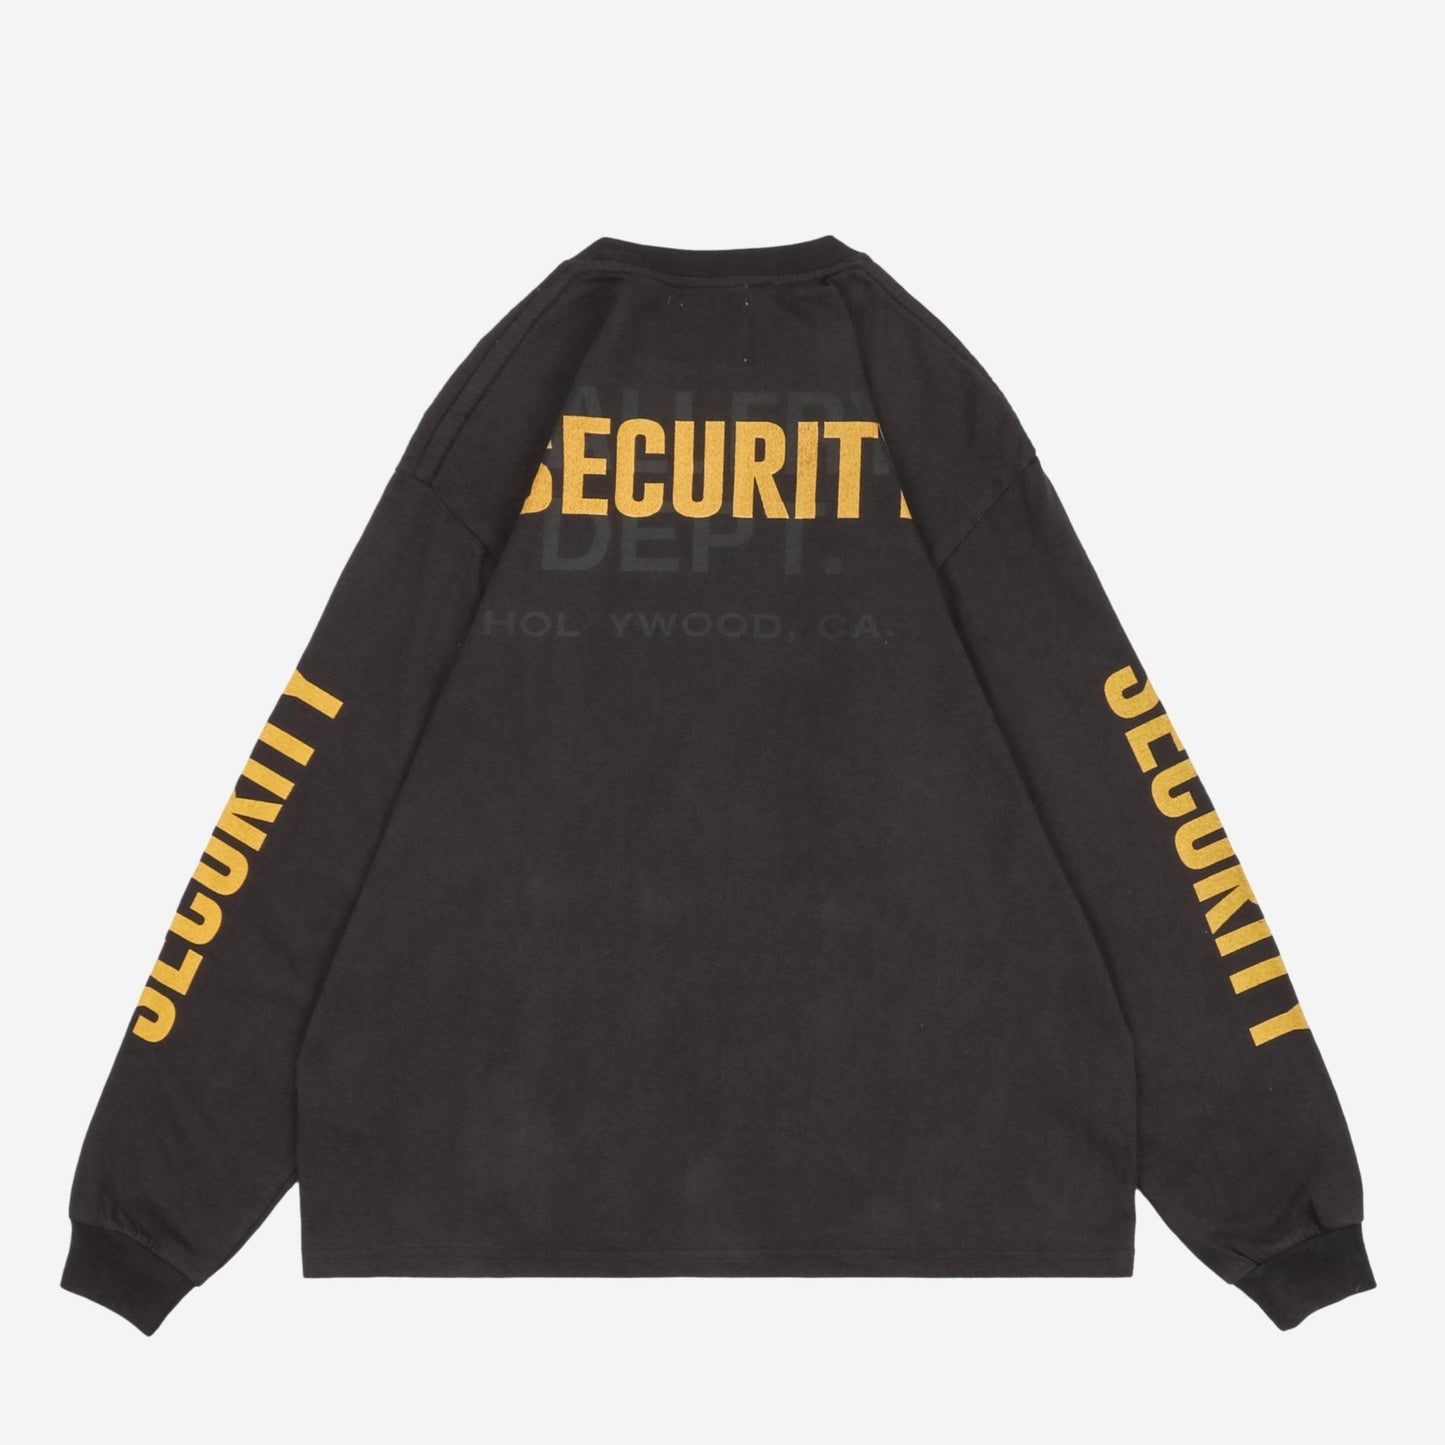 Gallery Dept Security Long Black Sweatshirt